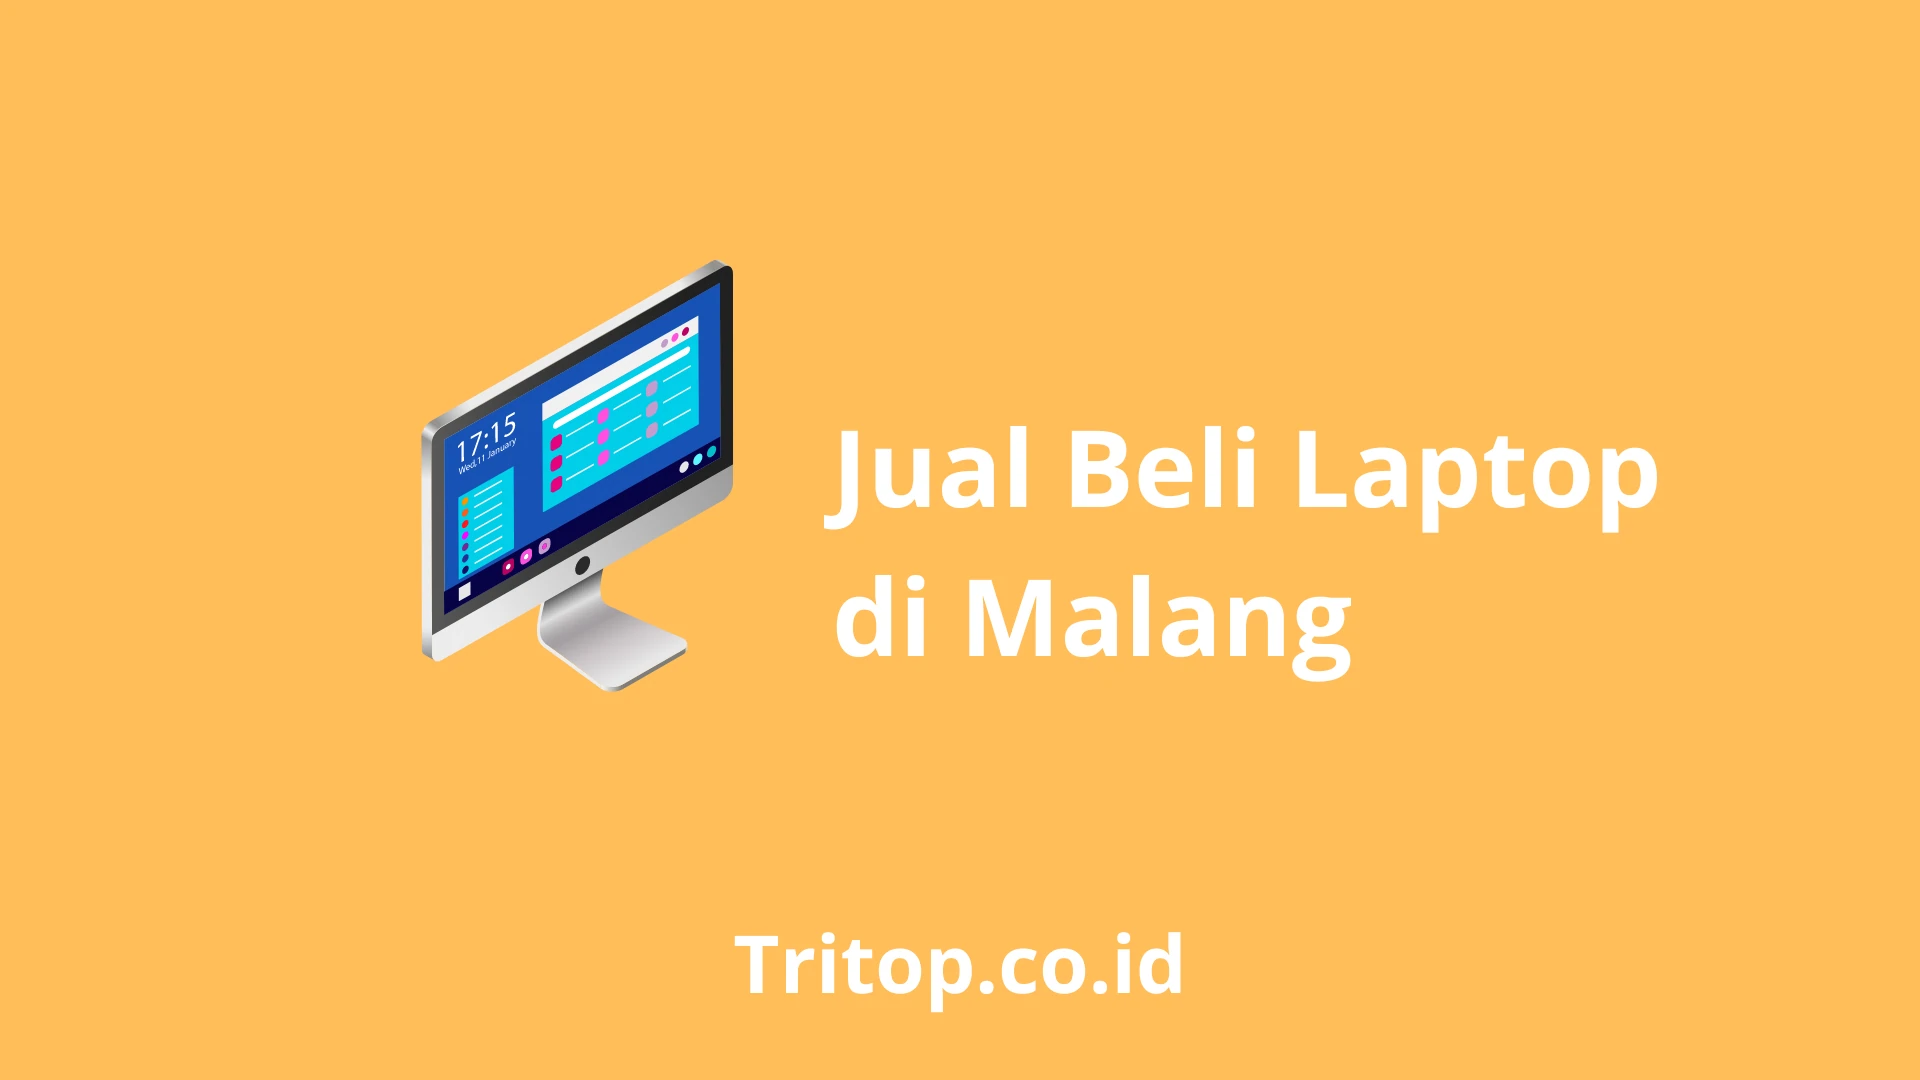 Jual Beli Laptop Malang tritop.co.id